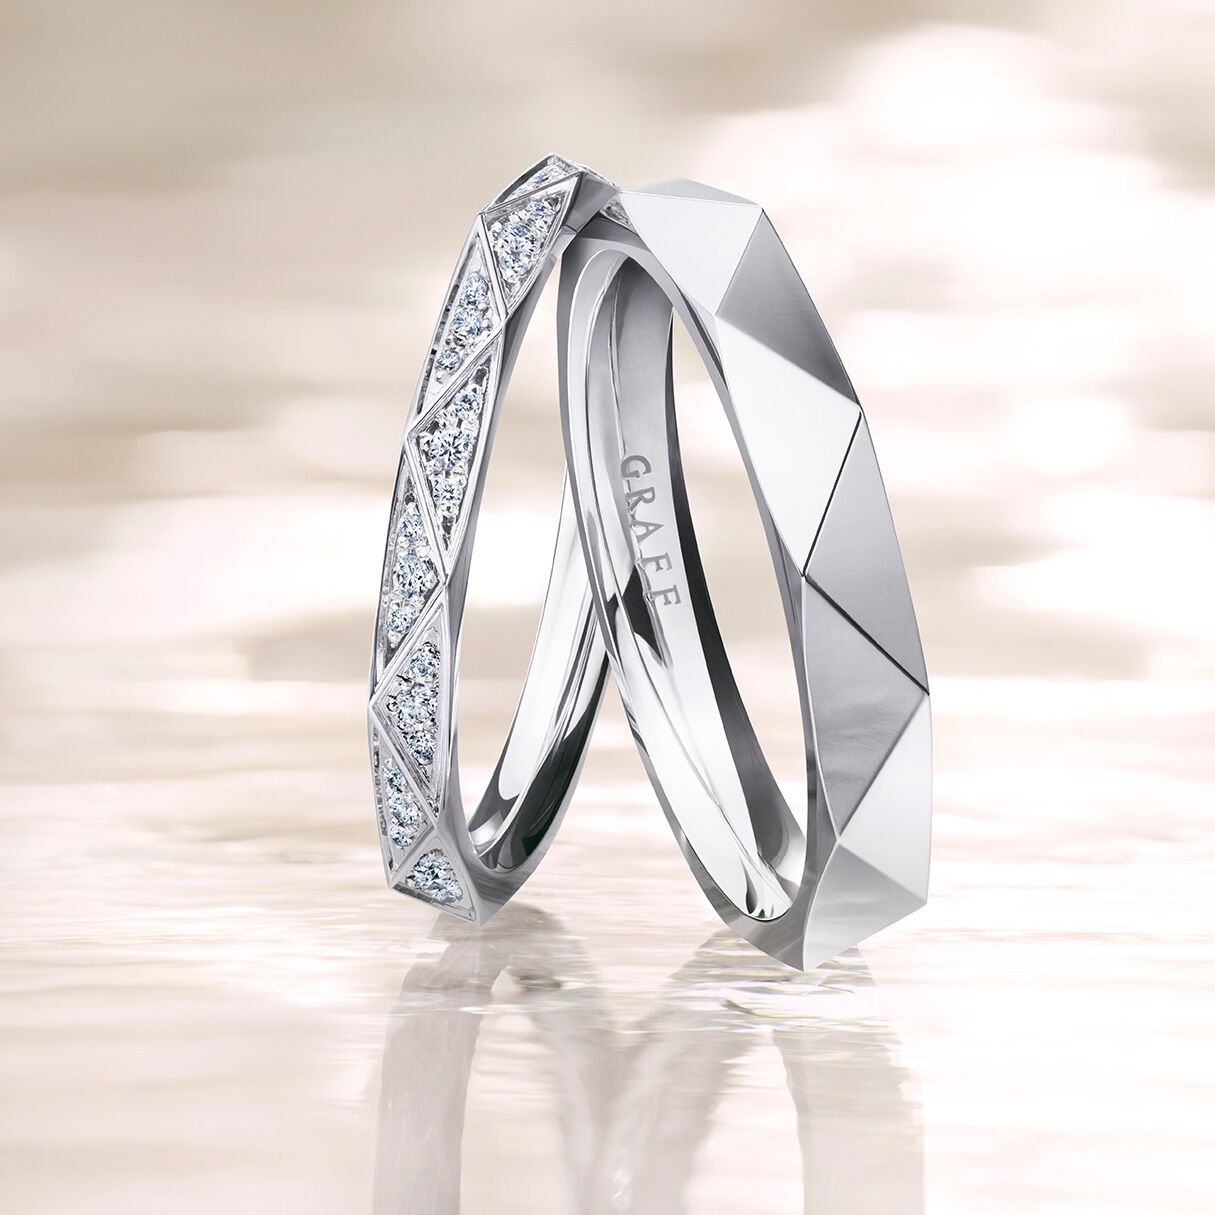 Buy Silver Wedding Band Set, Modern Wedding Ring Set, Matching Wedding Bands  for Couple, Couple Wedding Rings, Handmade Engagement Ring, Online in India  - Etsy